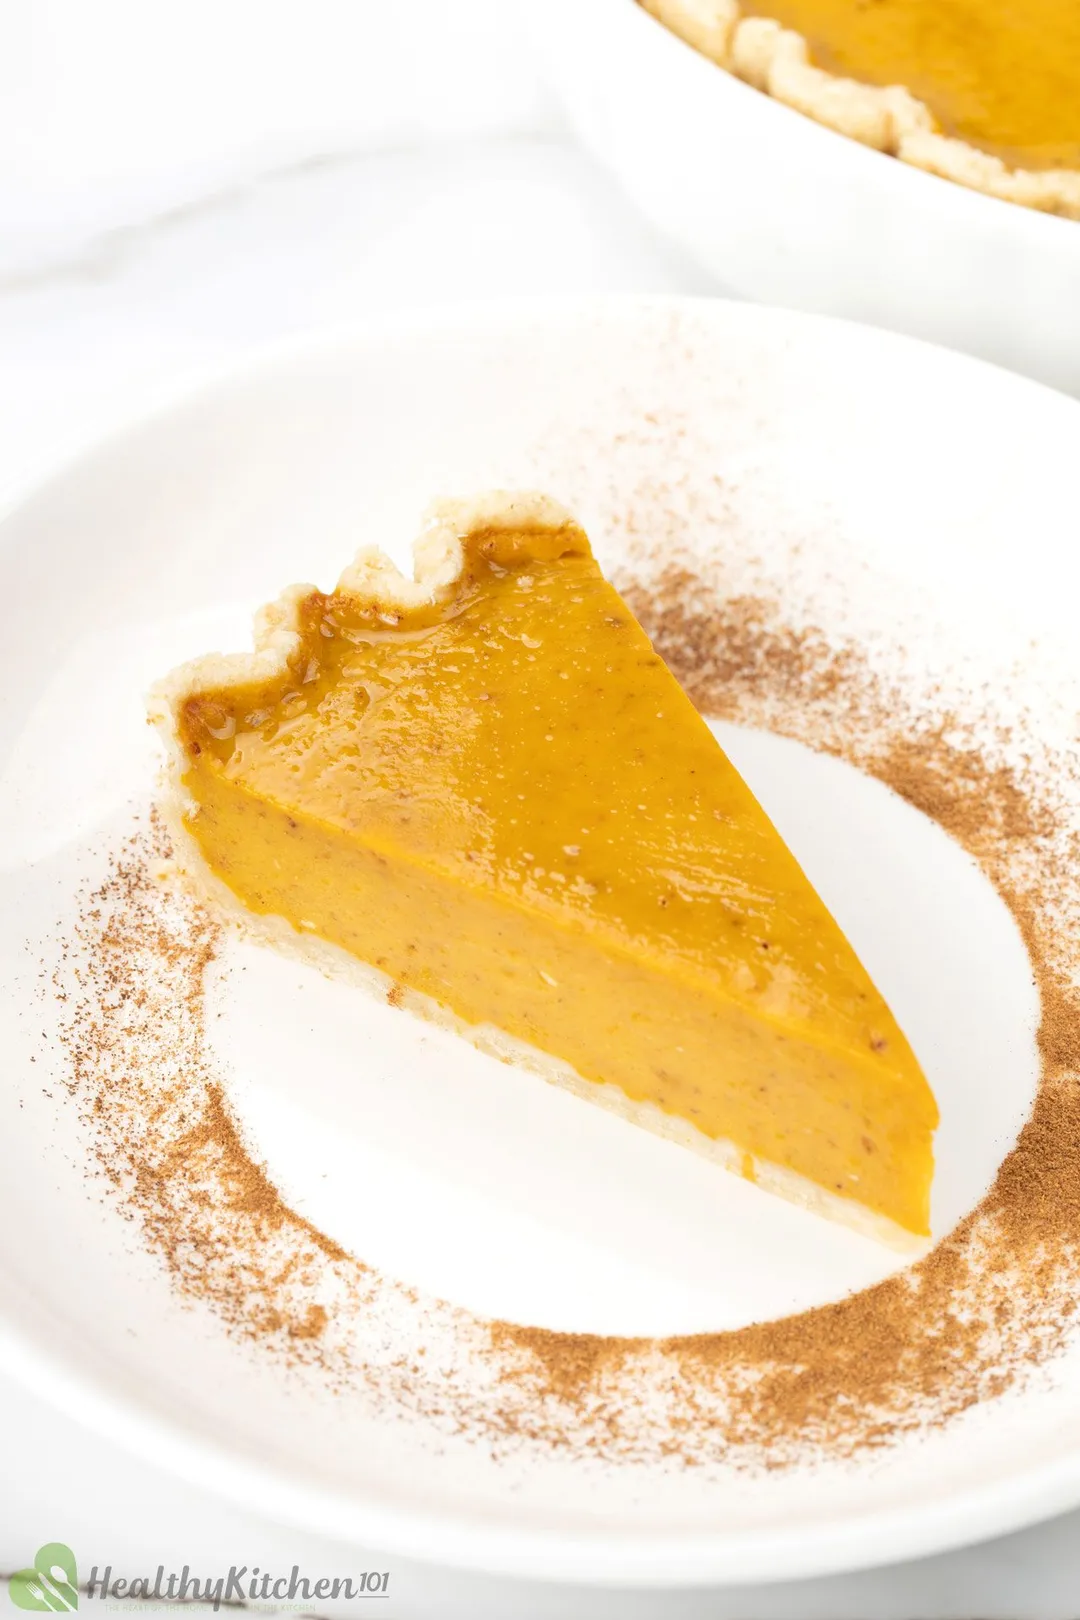 A slice of pumpkin pie on a white plate.